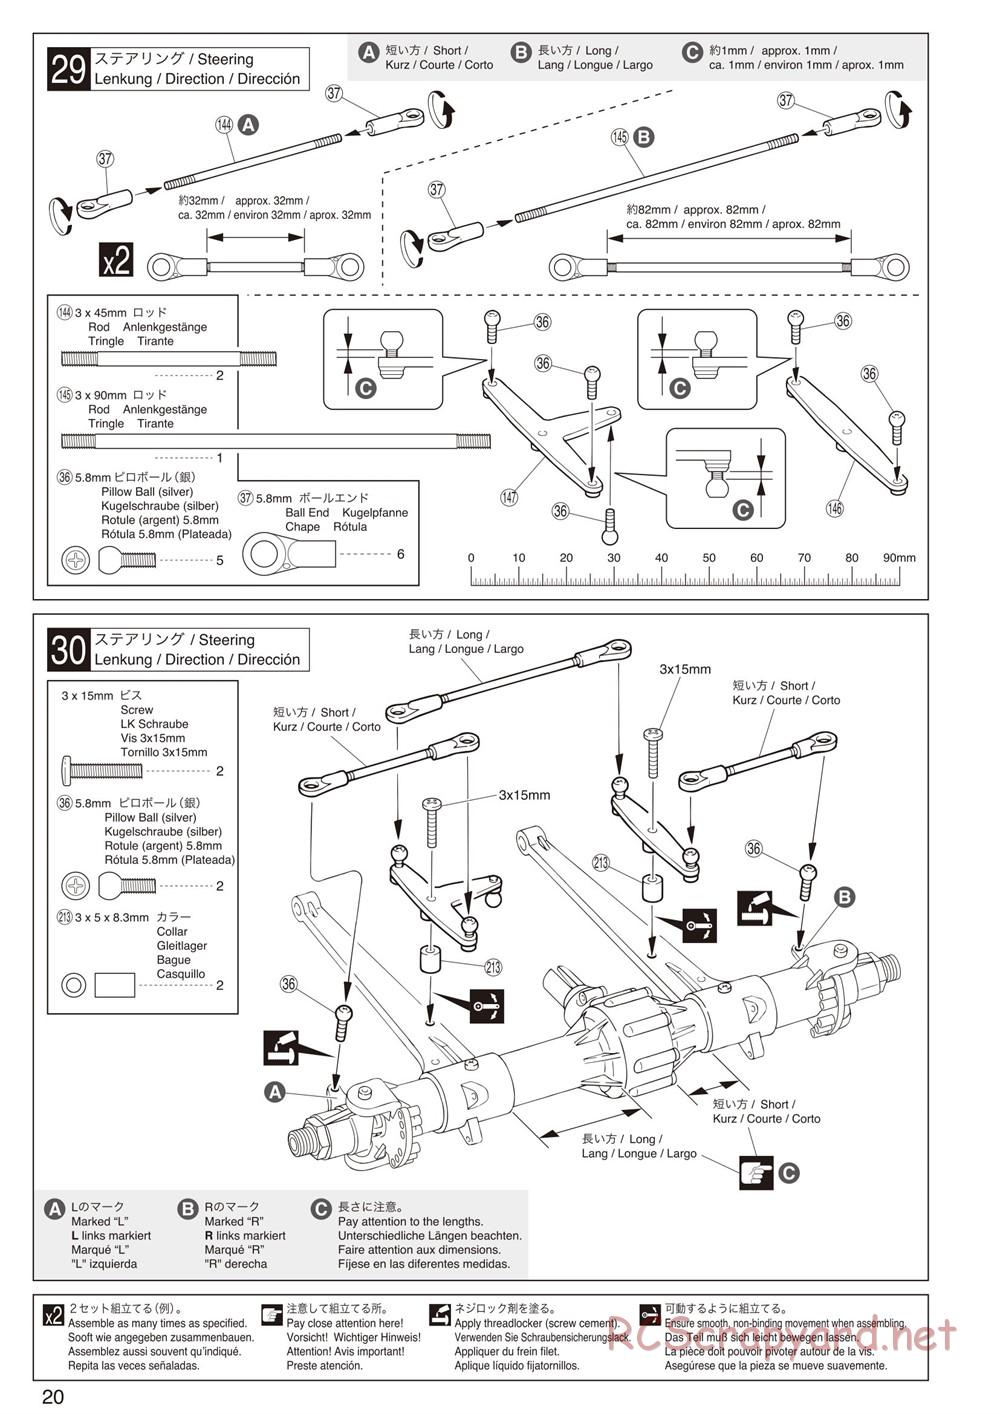 Kyosho - Mad Force Kruiser 2.0 VE - Manual - Page 20